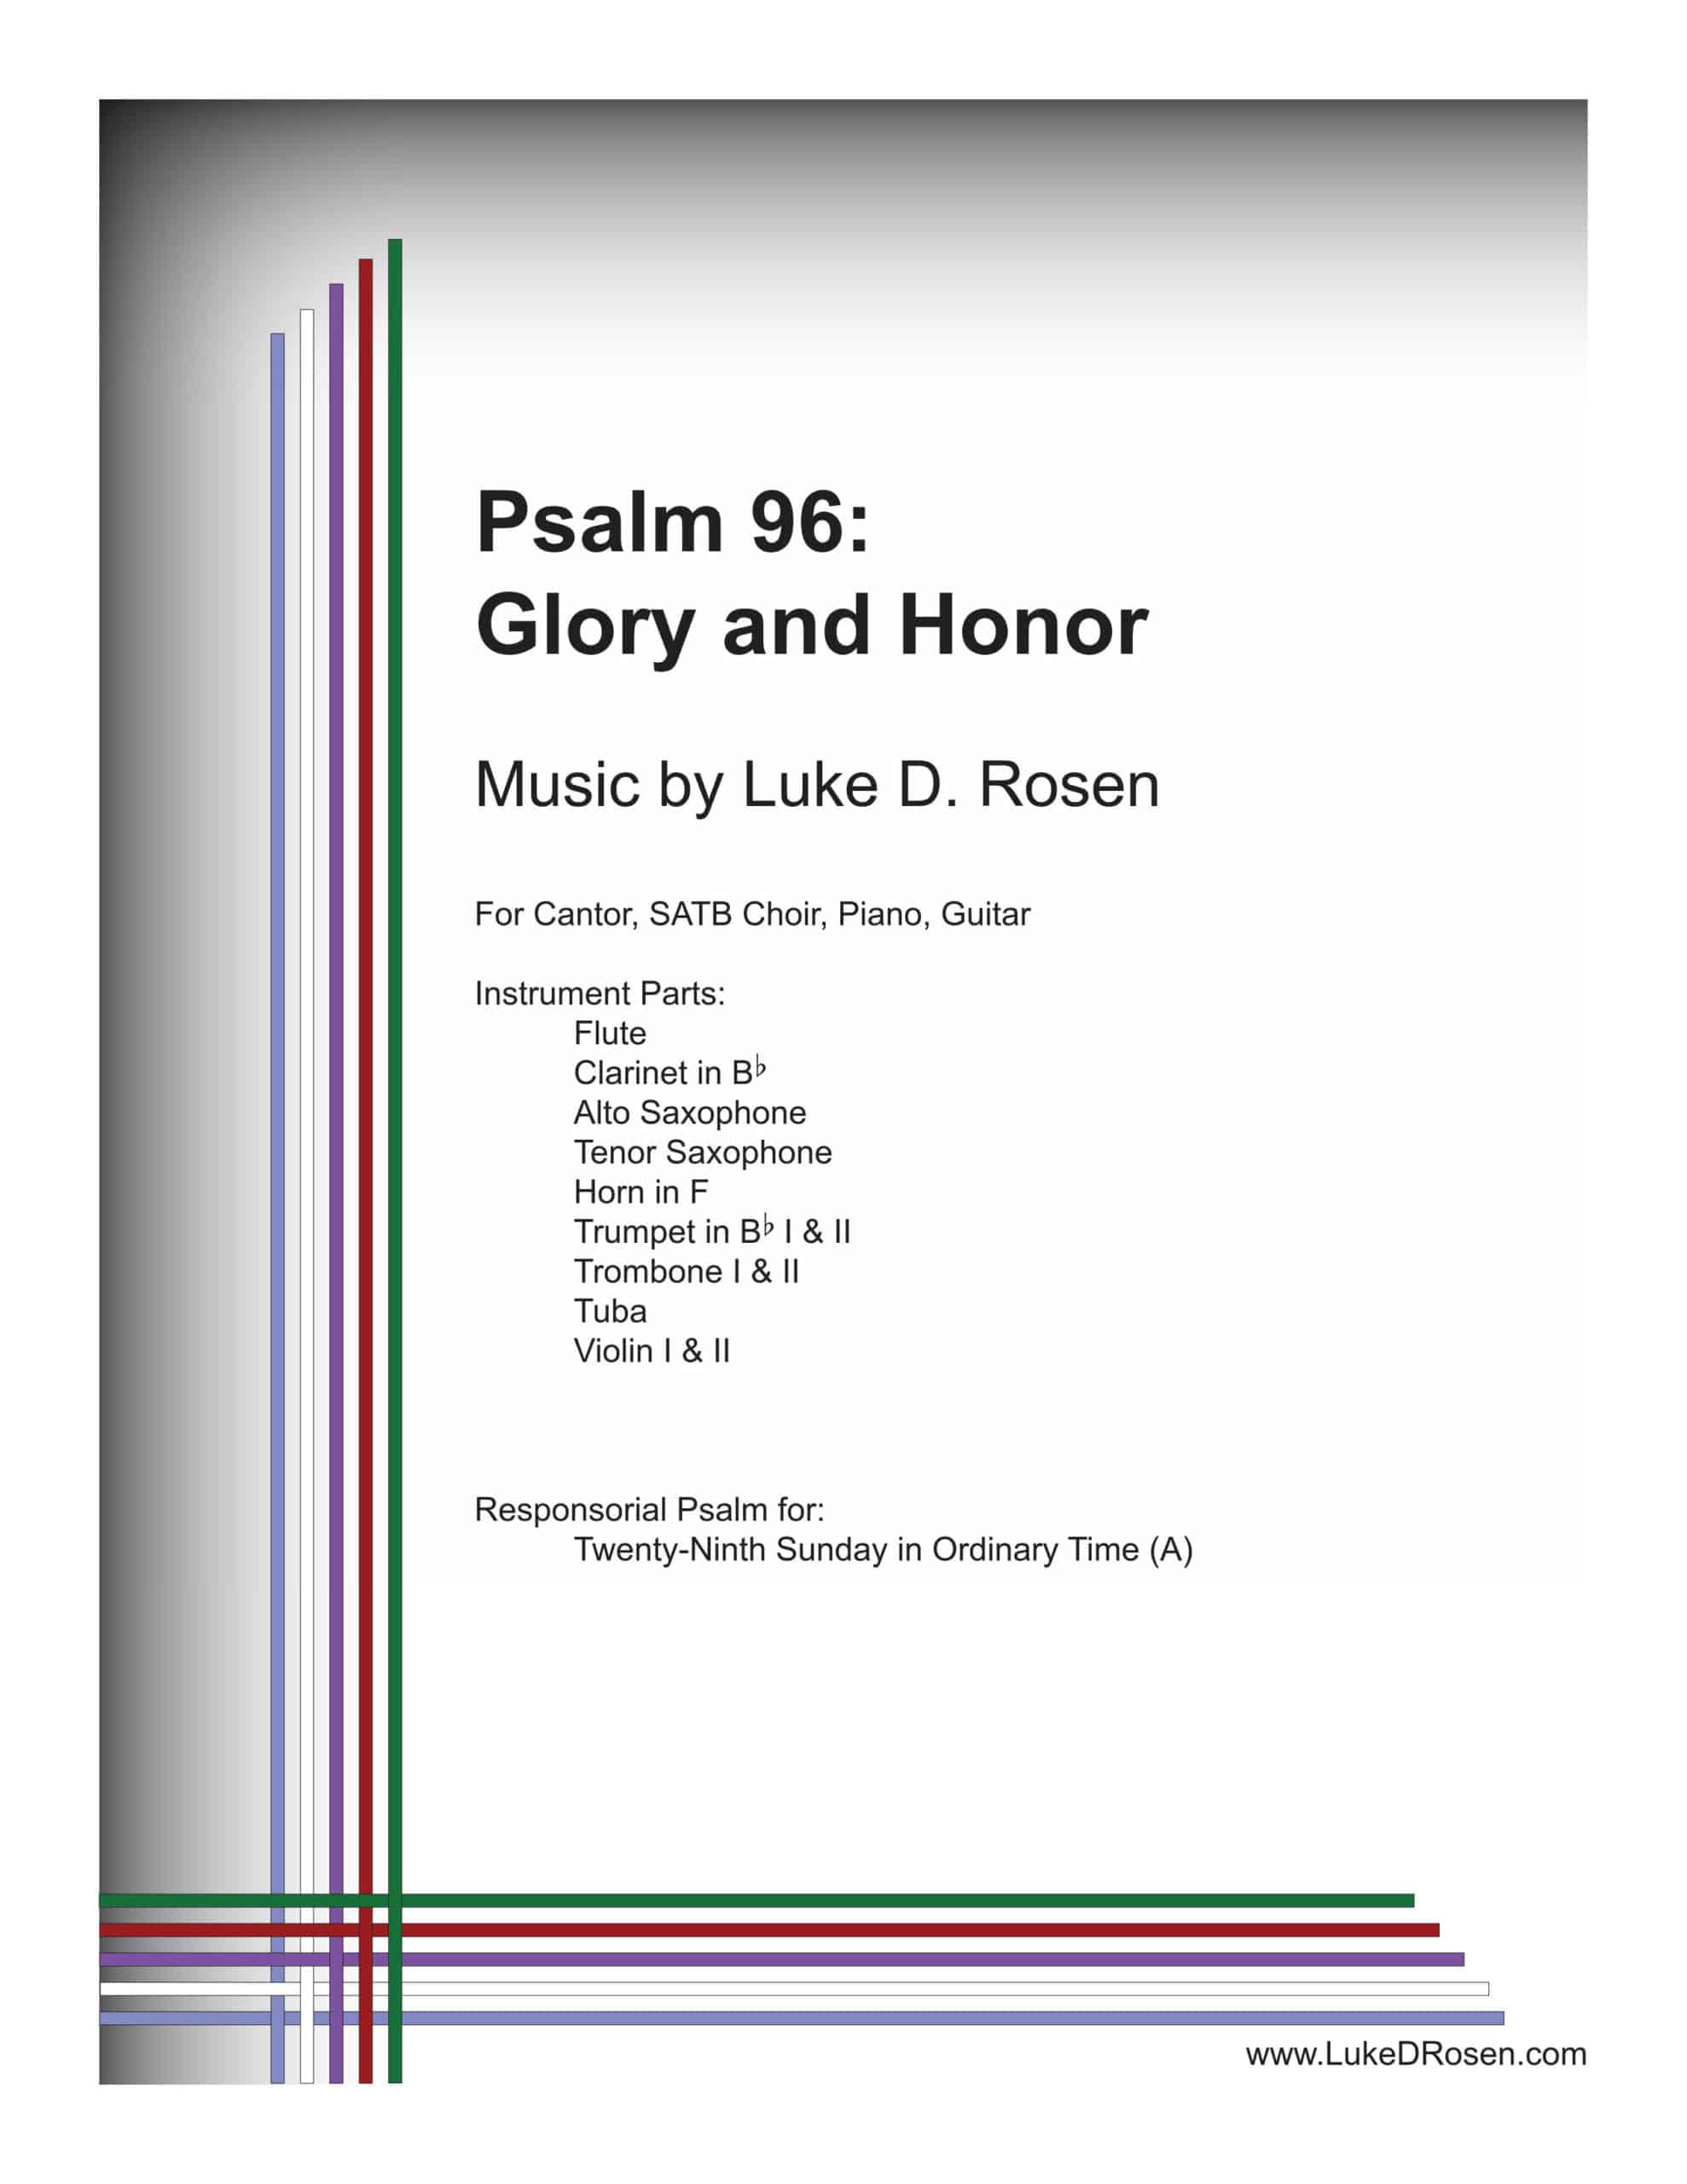 Psalm 96 – Glory and Honor (Rosen)